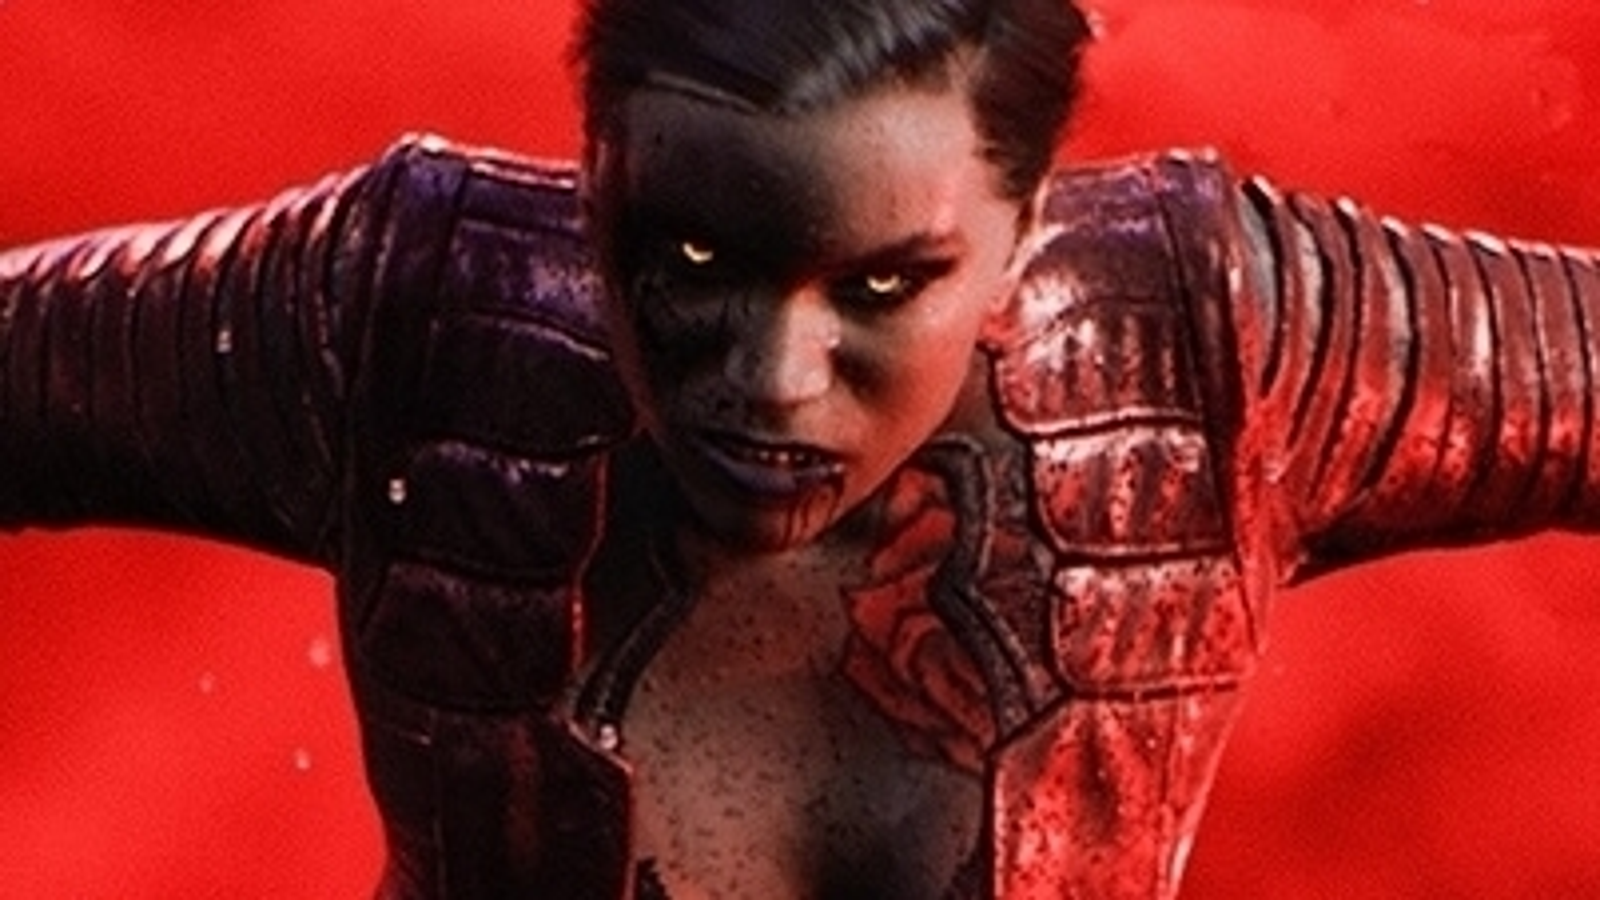 Phoenix Games Unveils Vampire: The Masquerade - Clans Of London